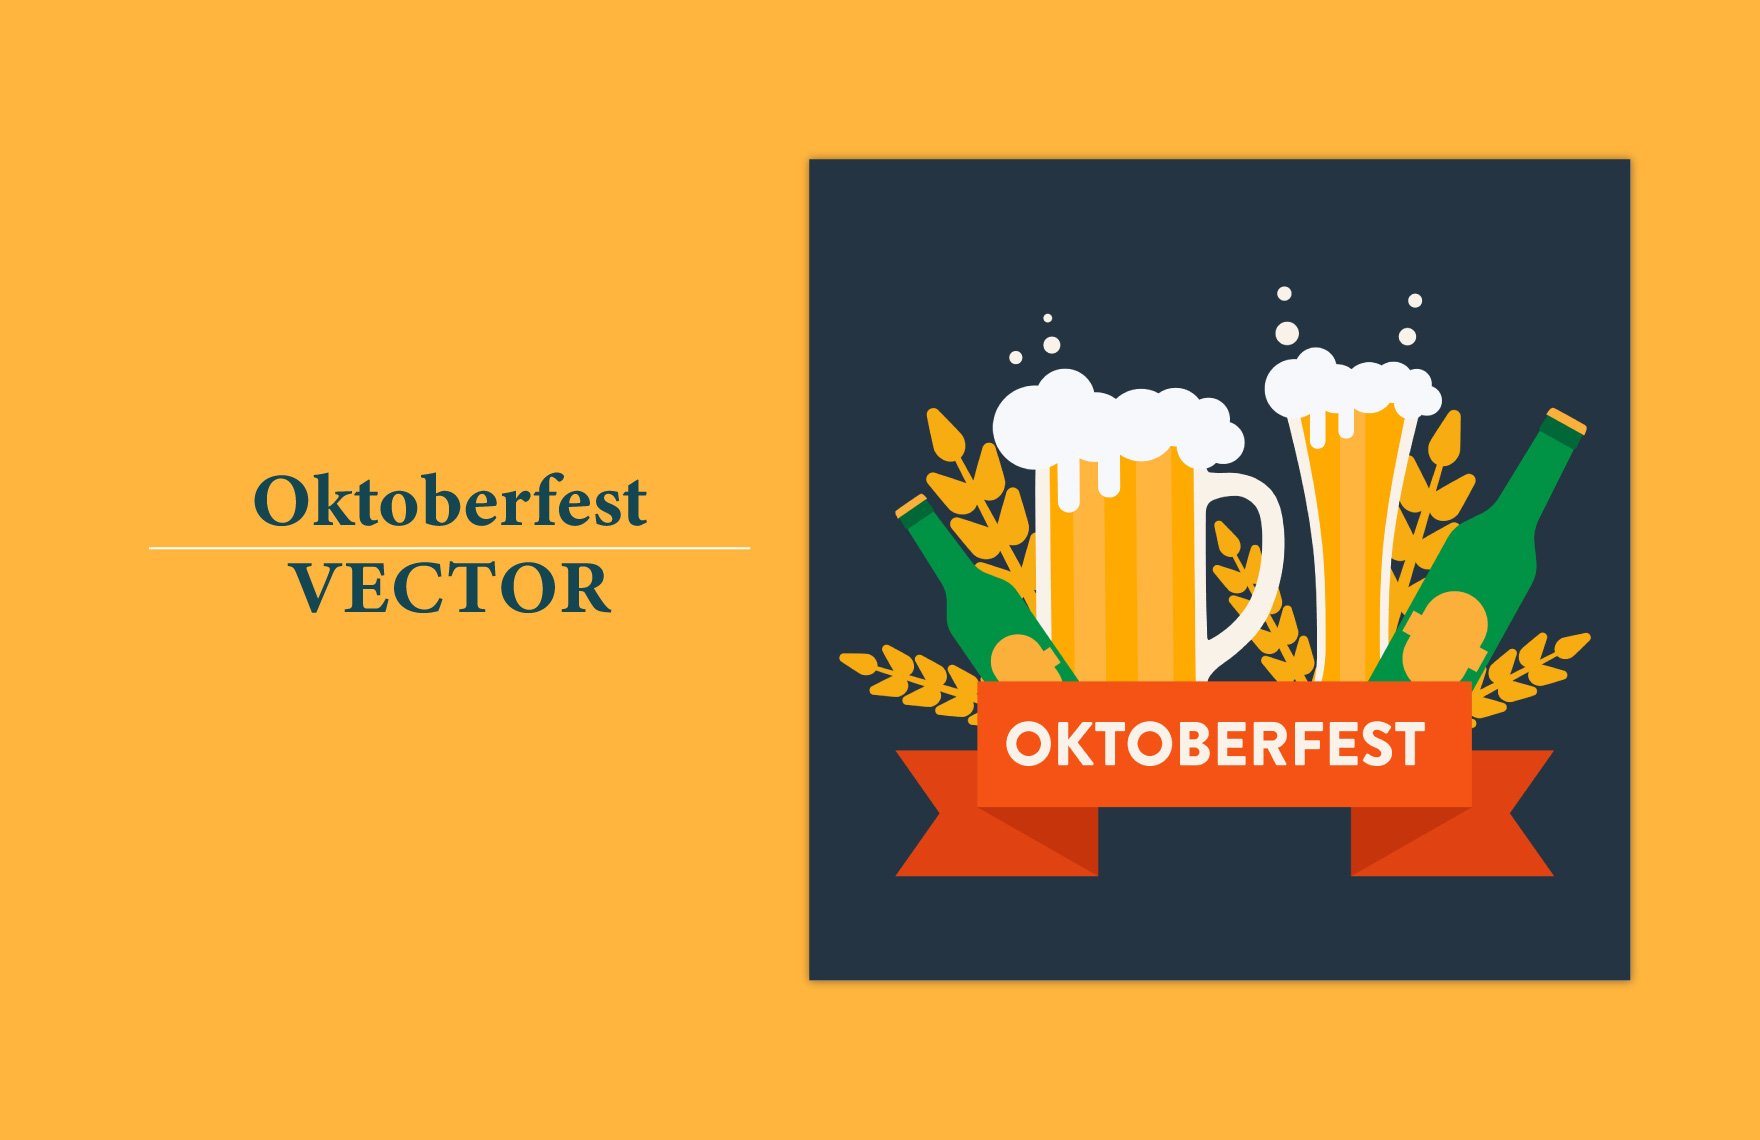 Oktoberfest Vector in Illustrator, PSD, EPS, SVG, JPG, PNG